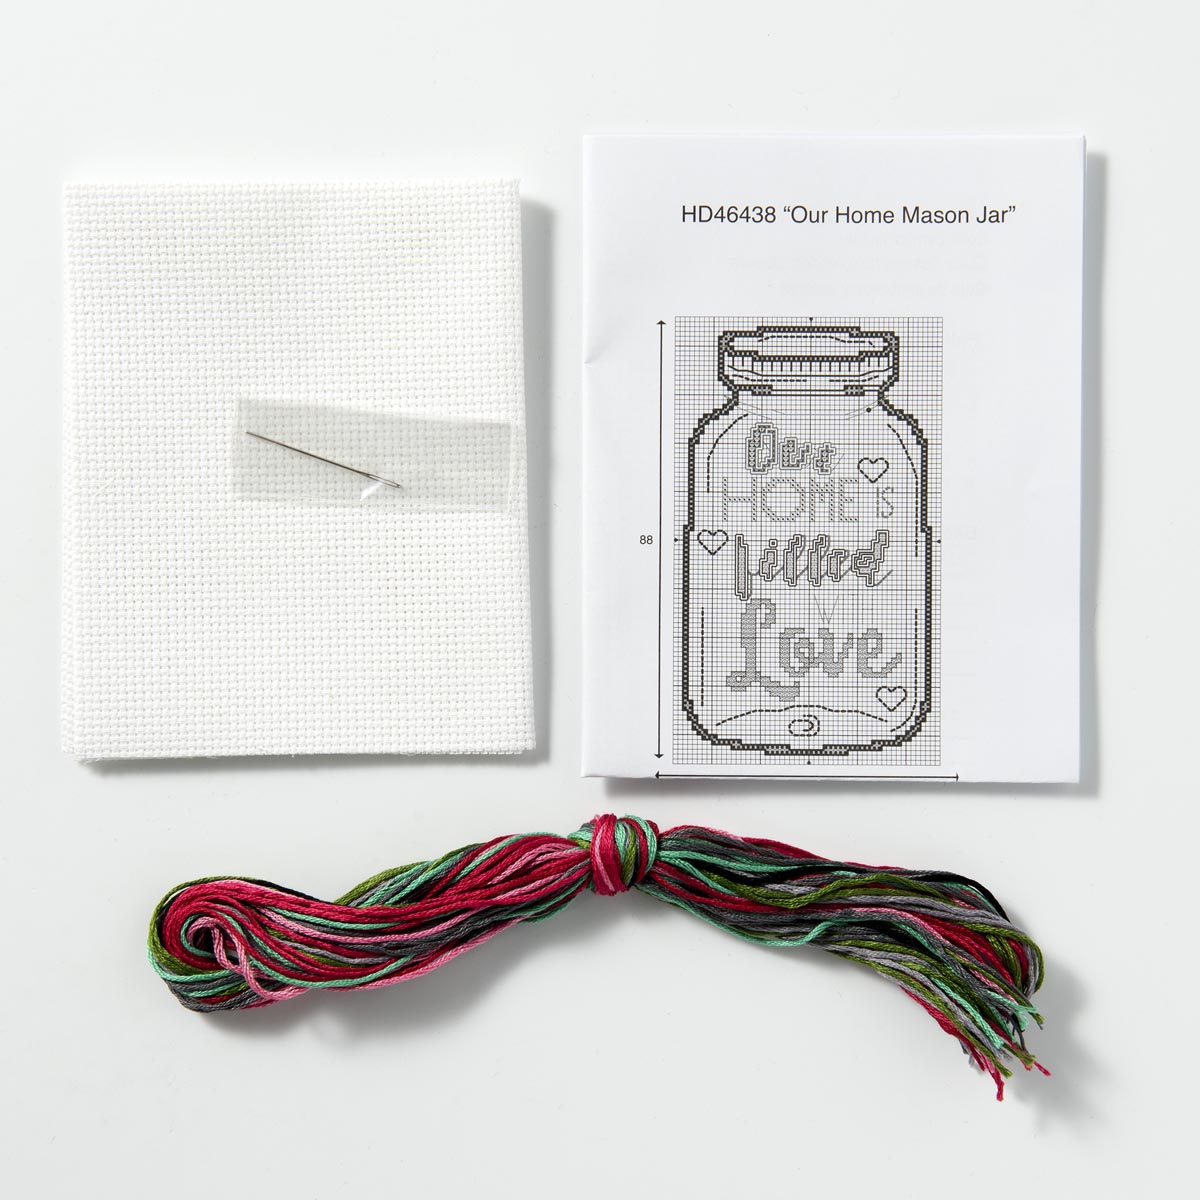 Bucilla ® My 1st Stitch™ - Counted Cross Stitch Kits - Our Home Mason Jar - WM46438E